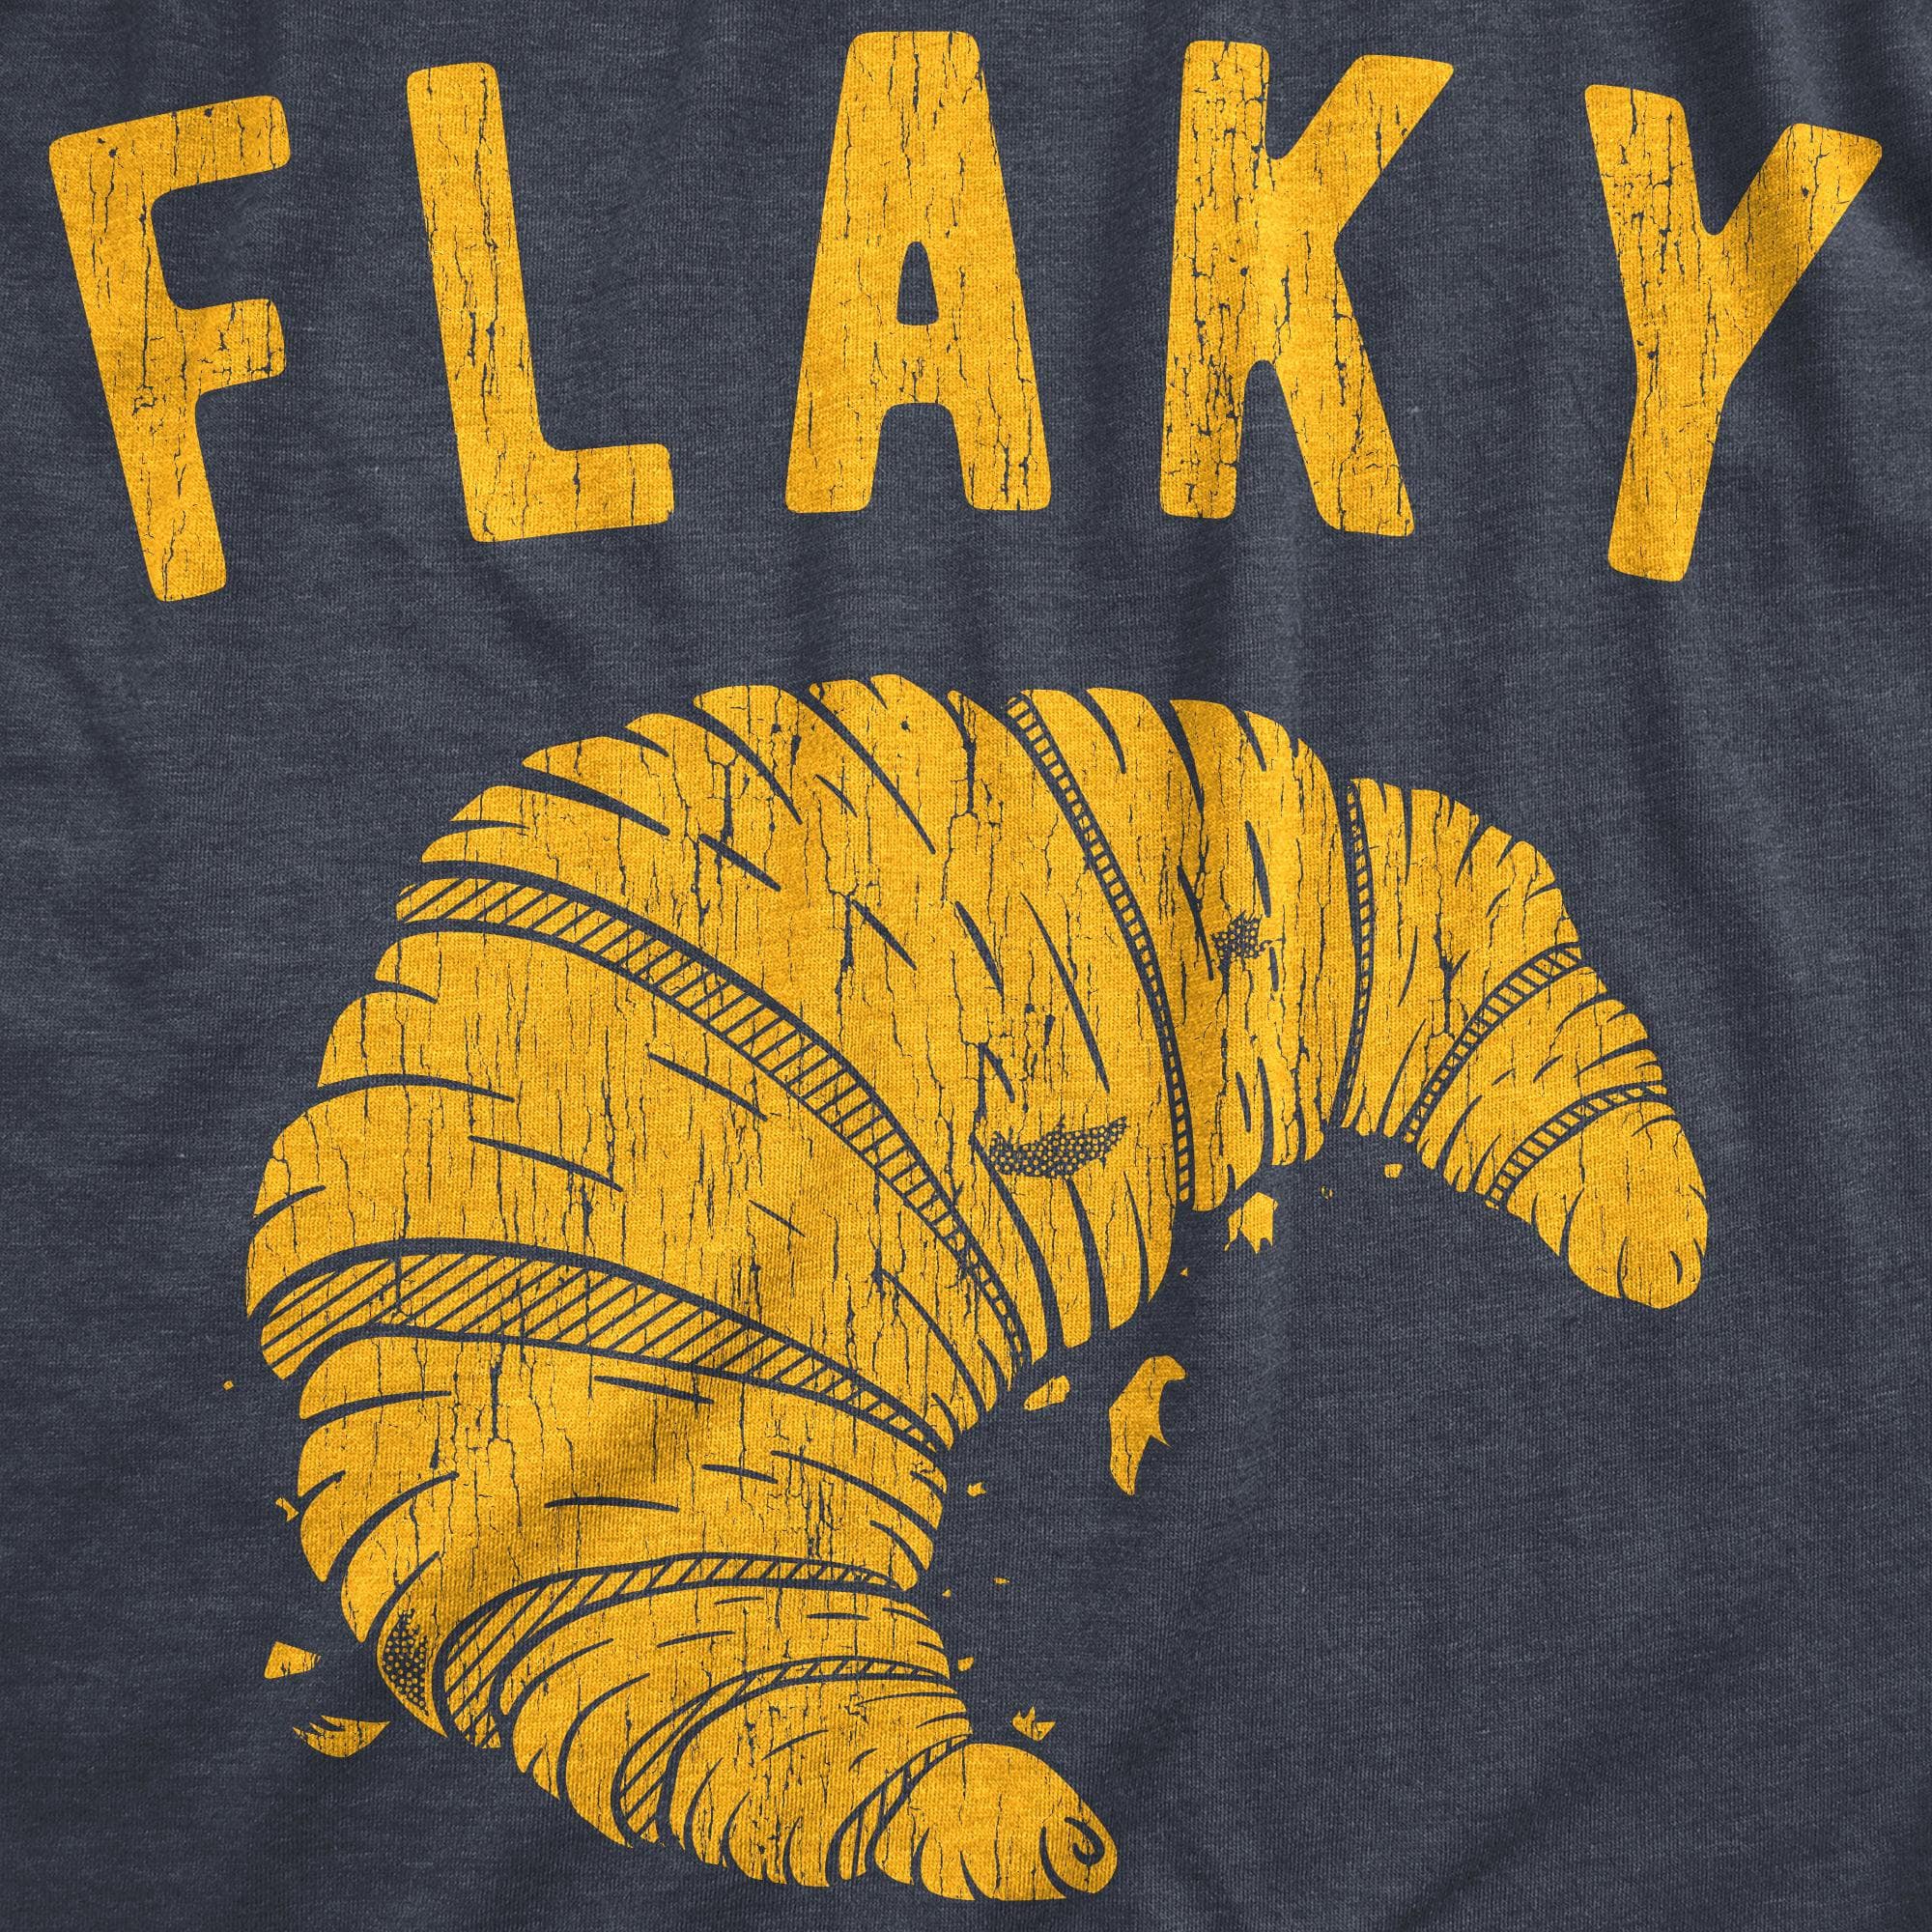 Flaky Women's Tshirt  -  Crazy Dog T-Shirts